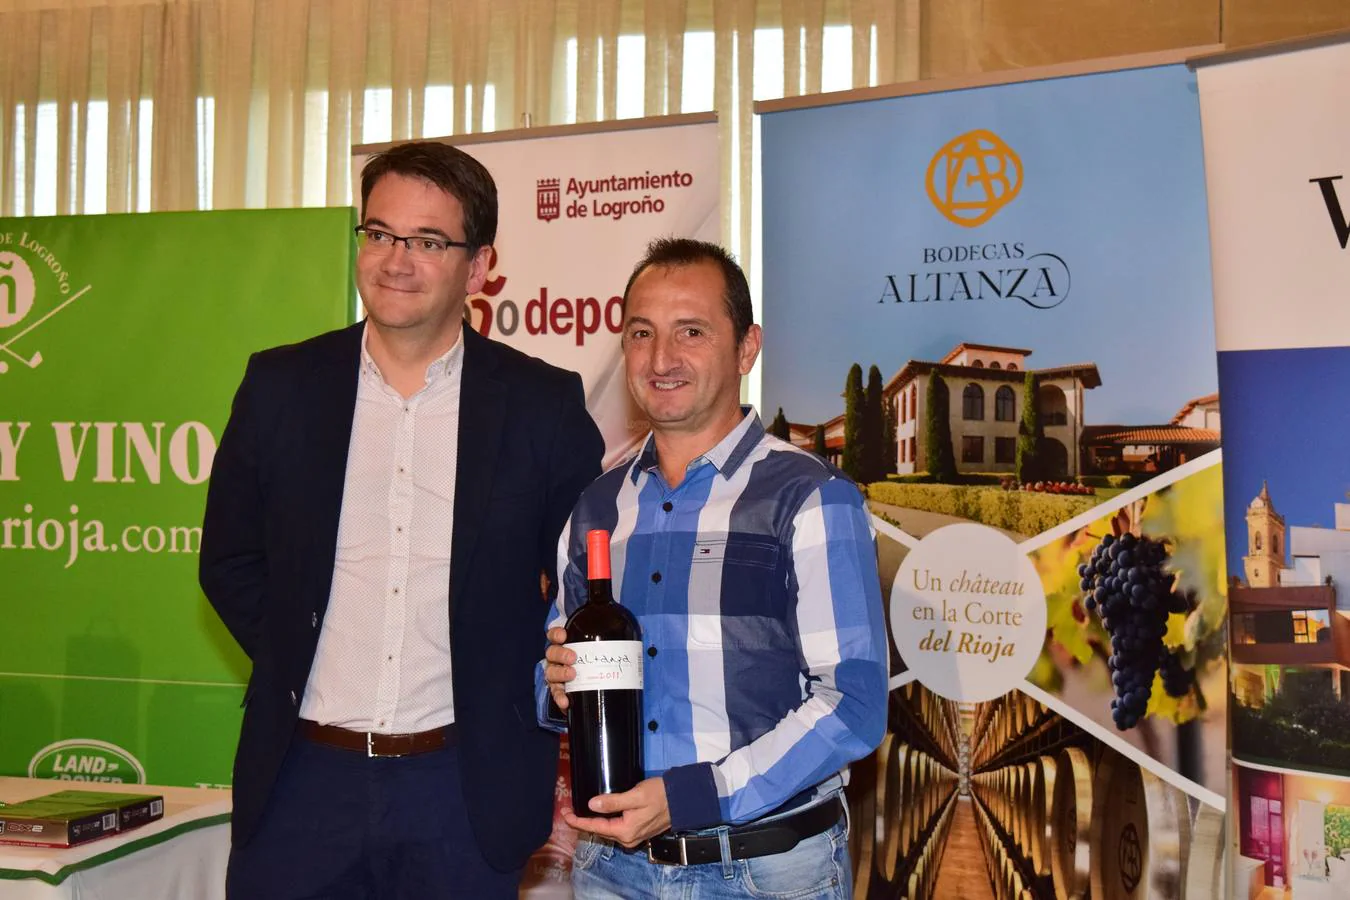 Torneo Bodegas Altanza (premios)